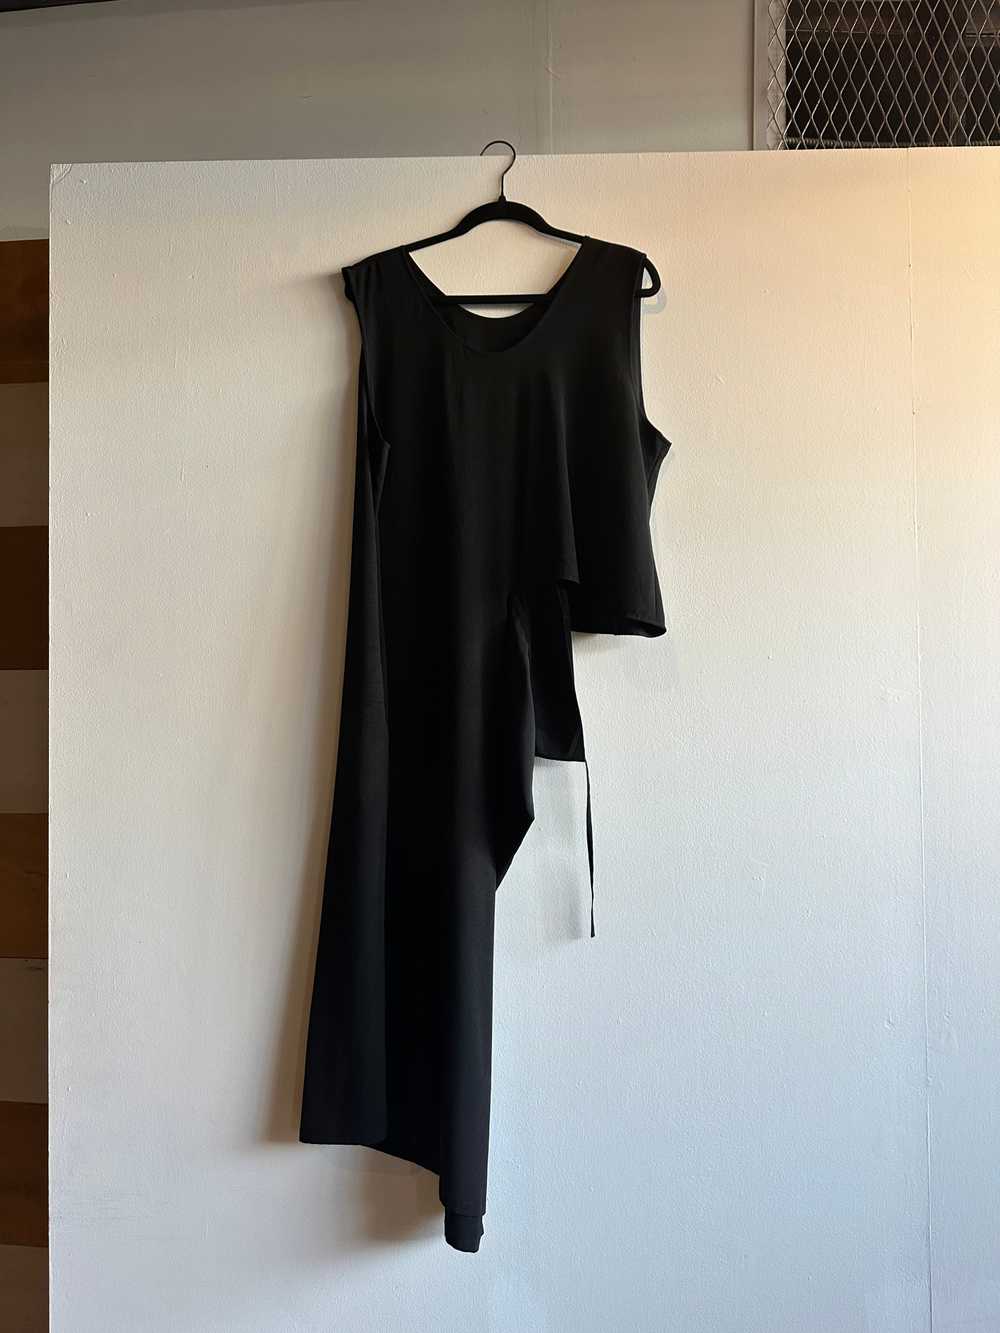 Michiko by Y’s Black Cutout Sleeveless Dress - image 4